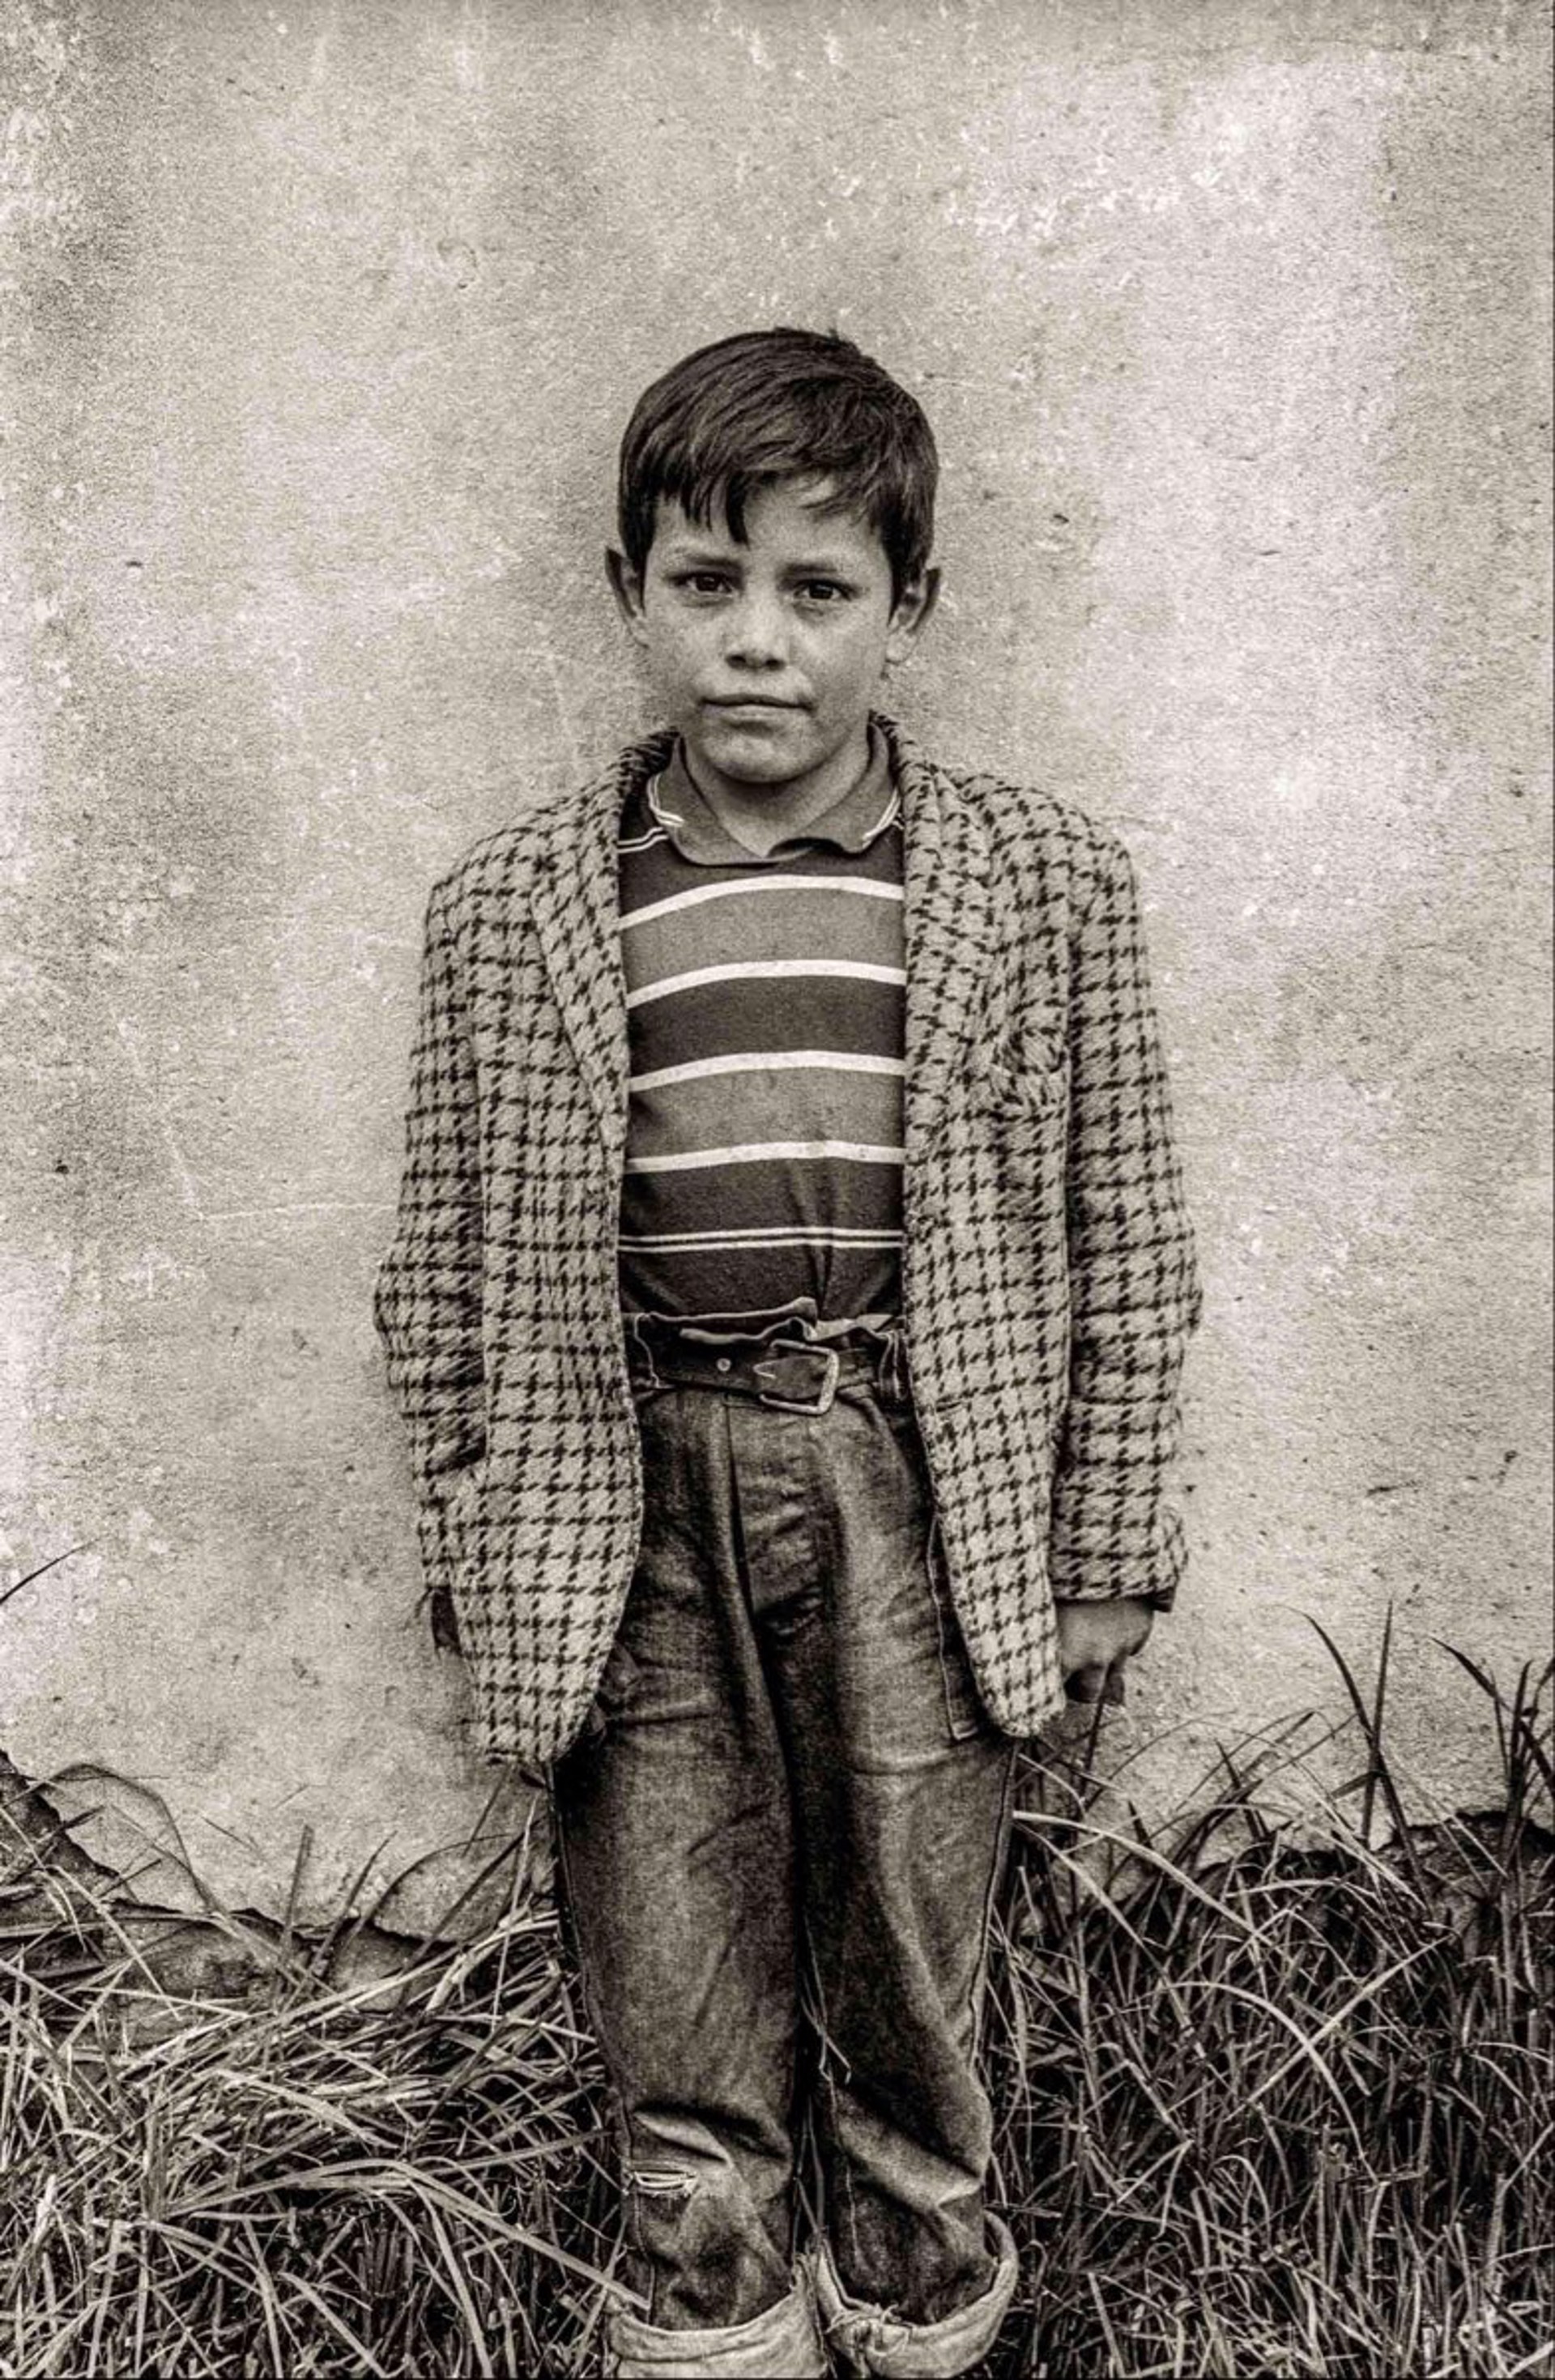 Boy in Striped Shirt & Jacket, Framed (034) by Jack Dempsey